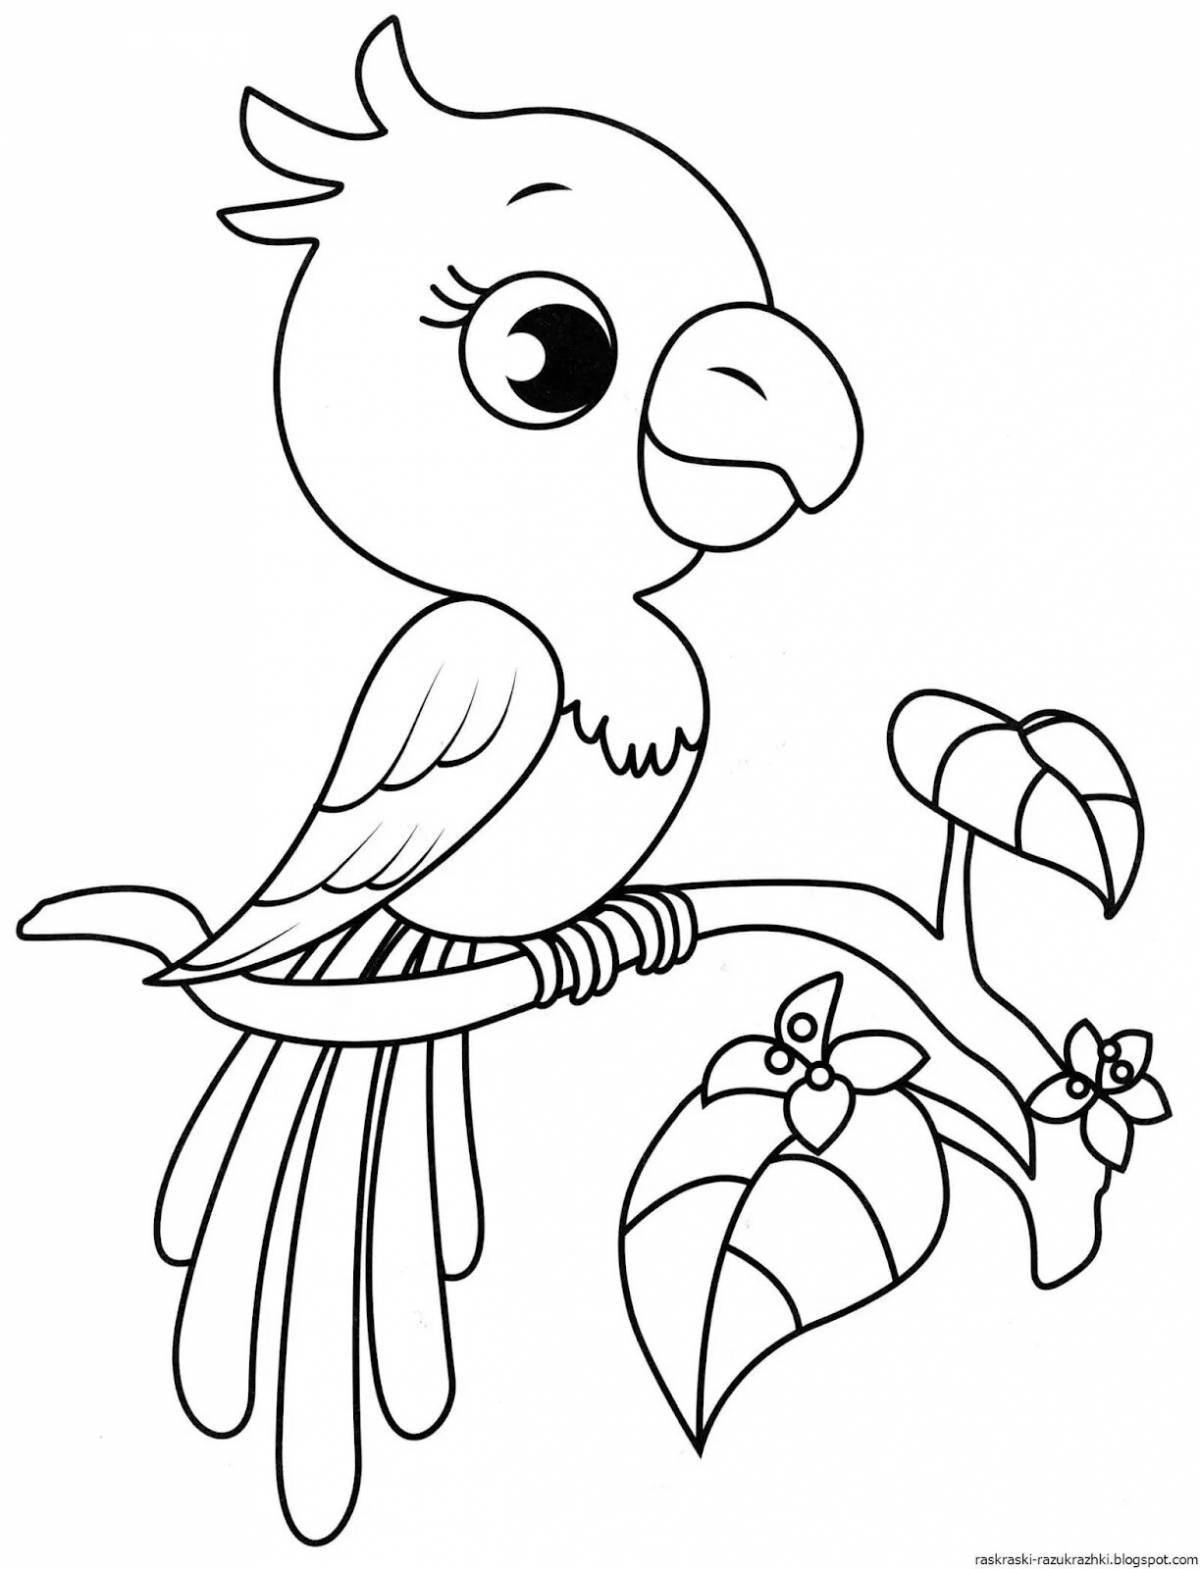 Fun coloring bird for kids